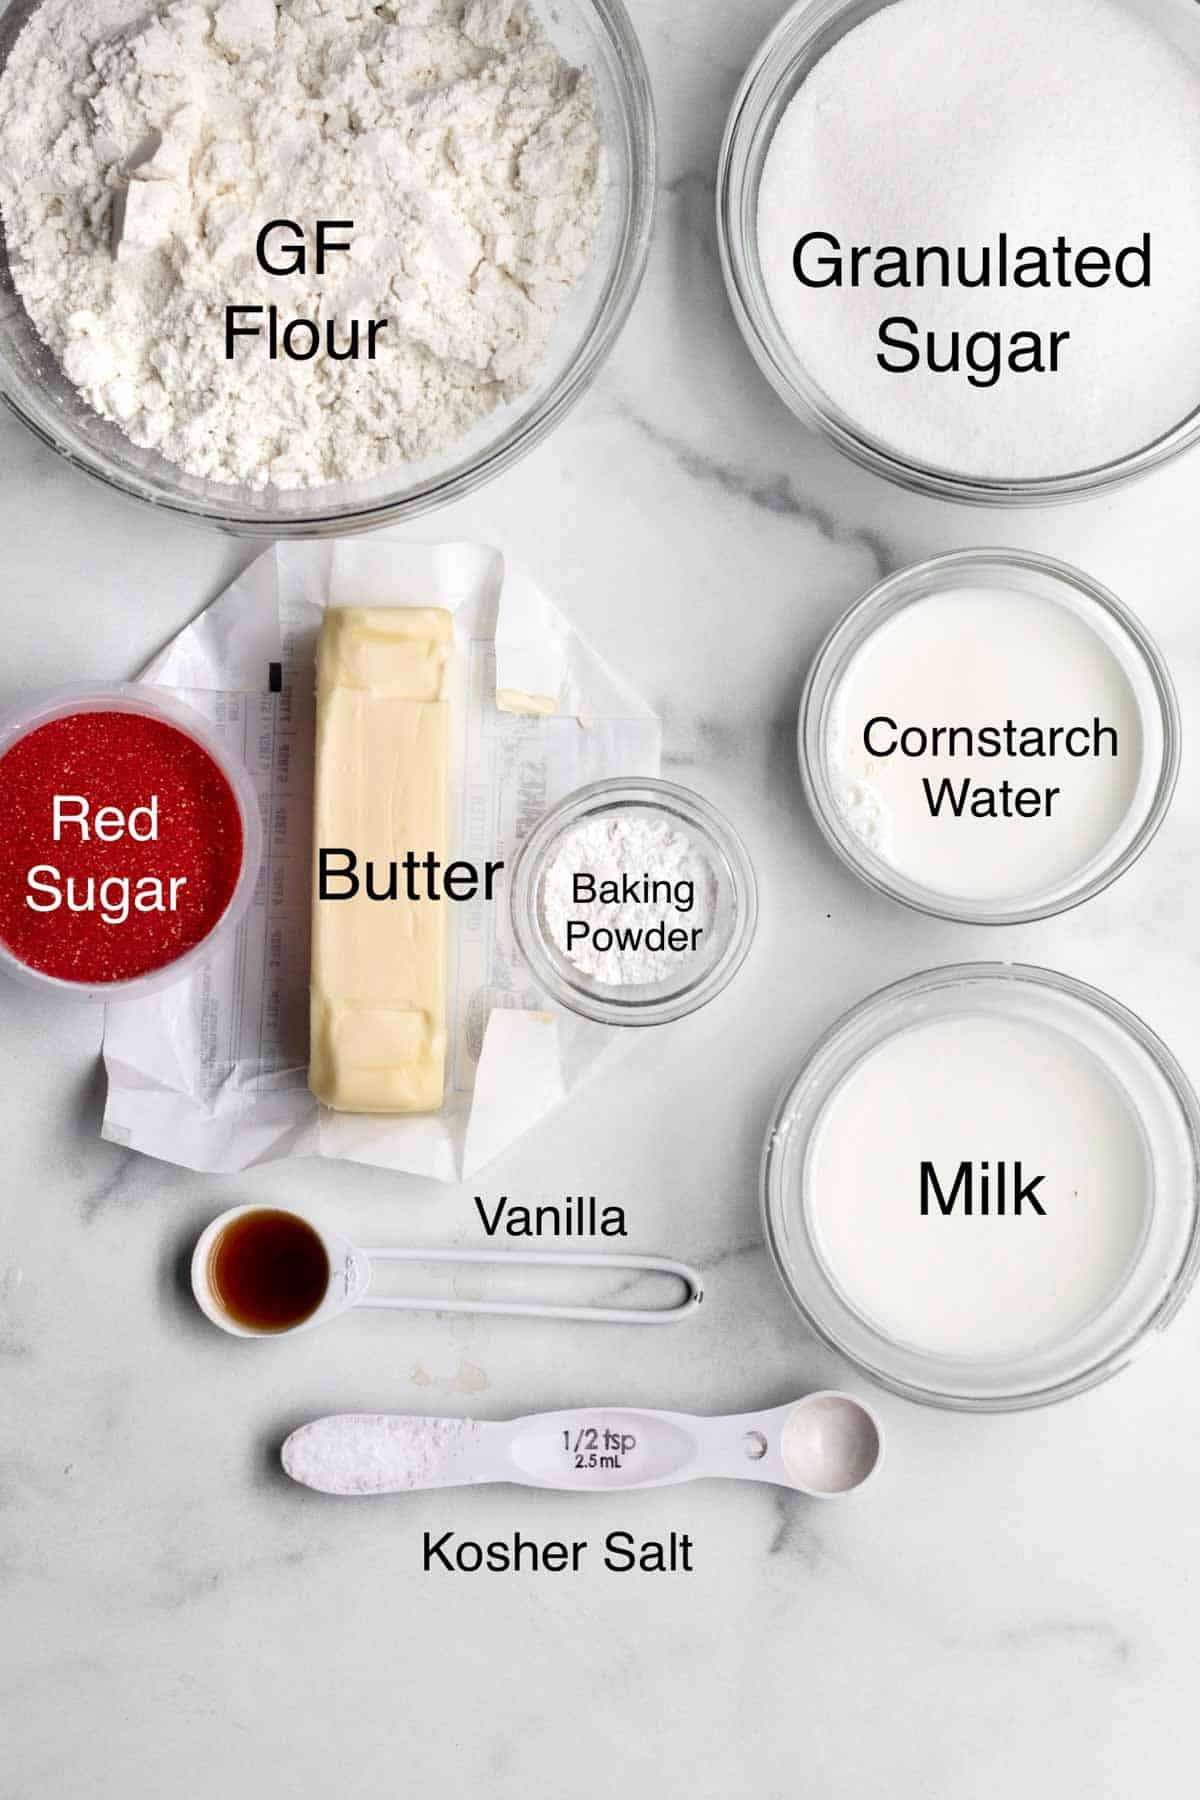 Gluten free flour, granulated sugar, red sugar, butter, baking powder, cornstarch water, vanilla, salt and milk in separate containers.